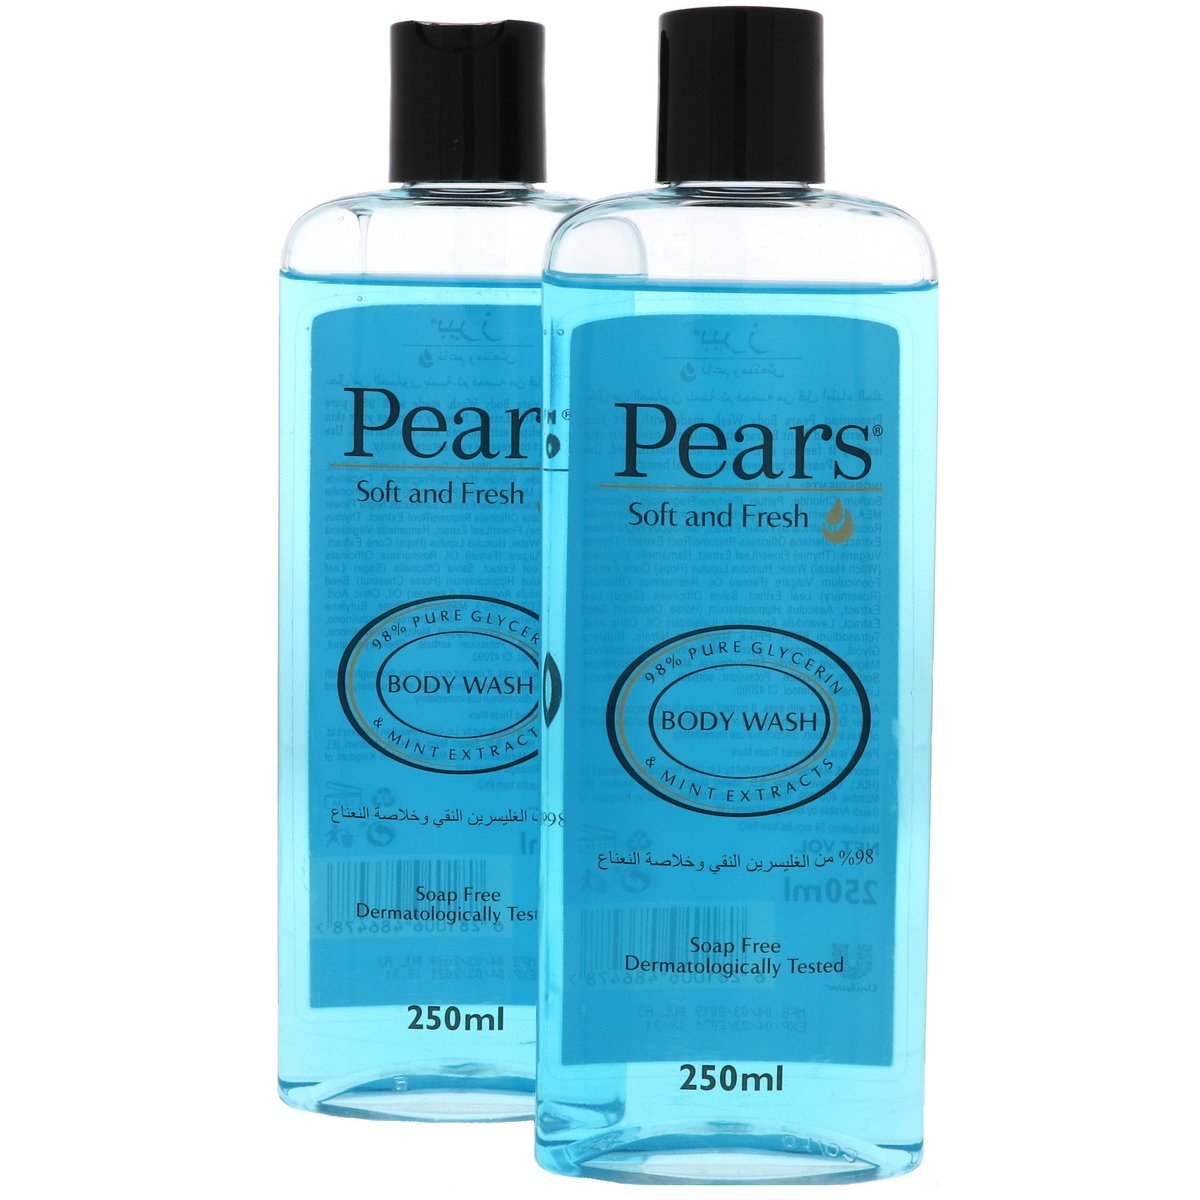 Pears Body Wash Soft and Fresh 2 x 250 ml